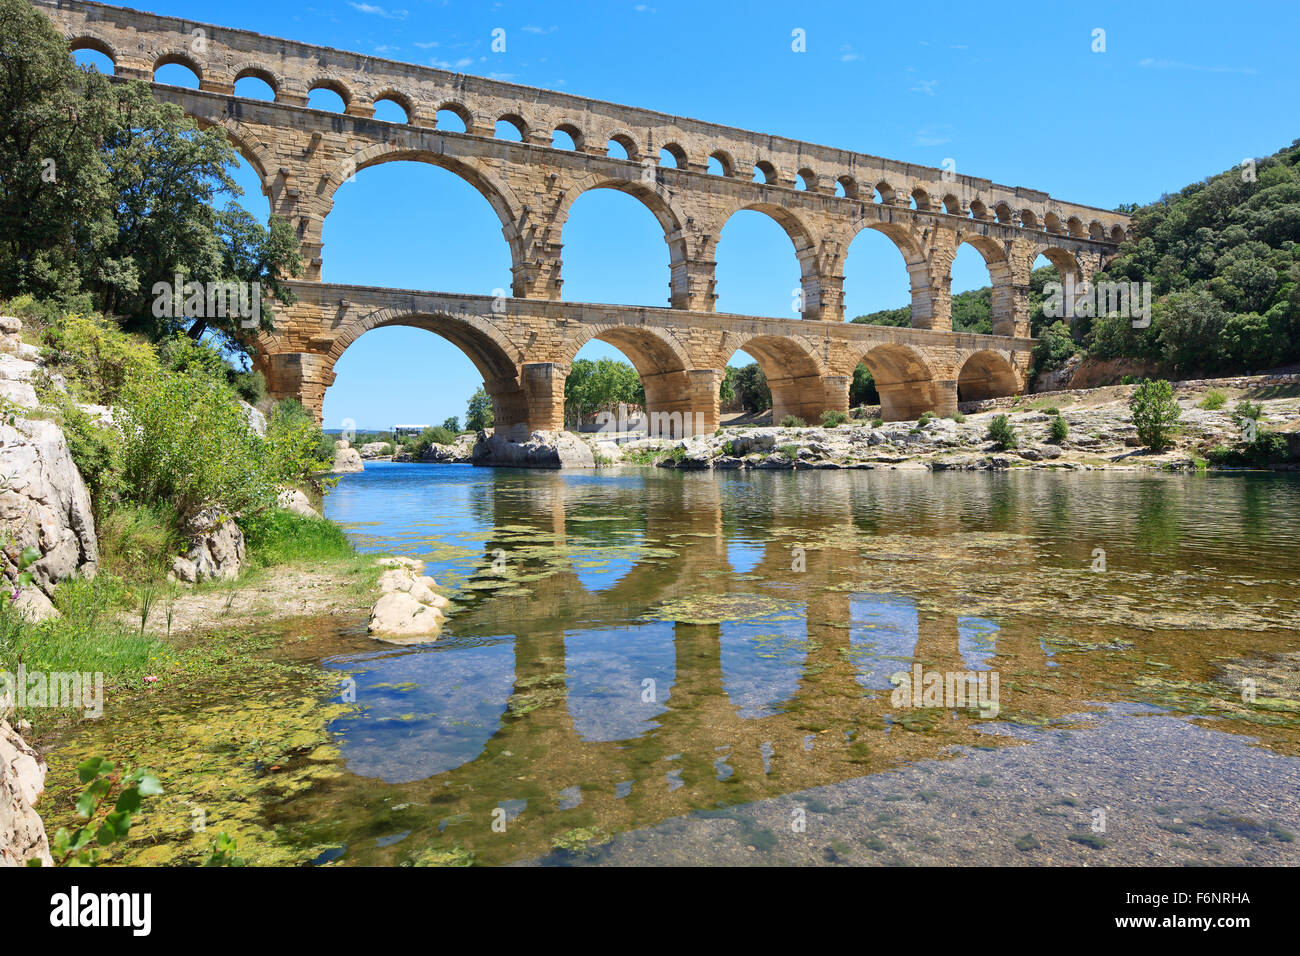 Roman aqueduct Pont du Gard, near Nimes, Languedoc, France, Europe. Unesco World Heritage site Stock Photo